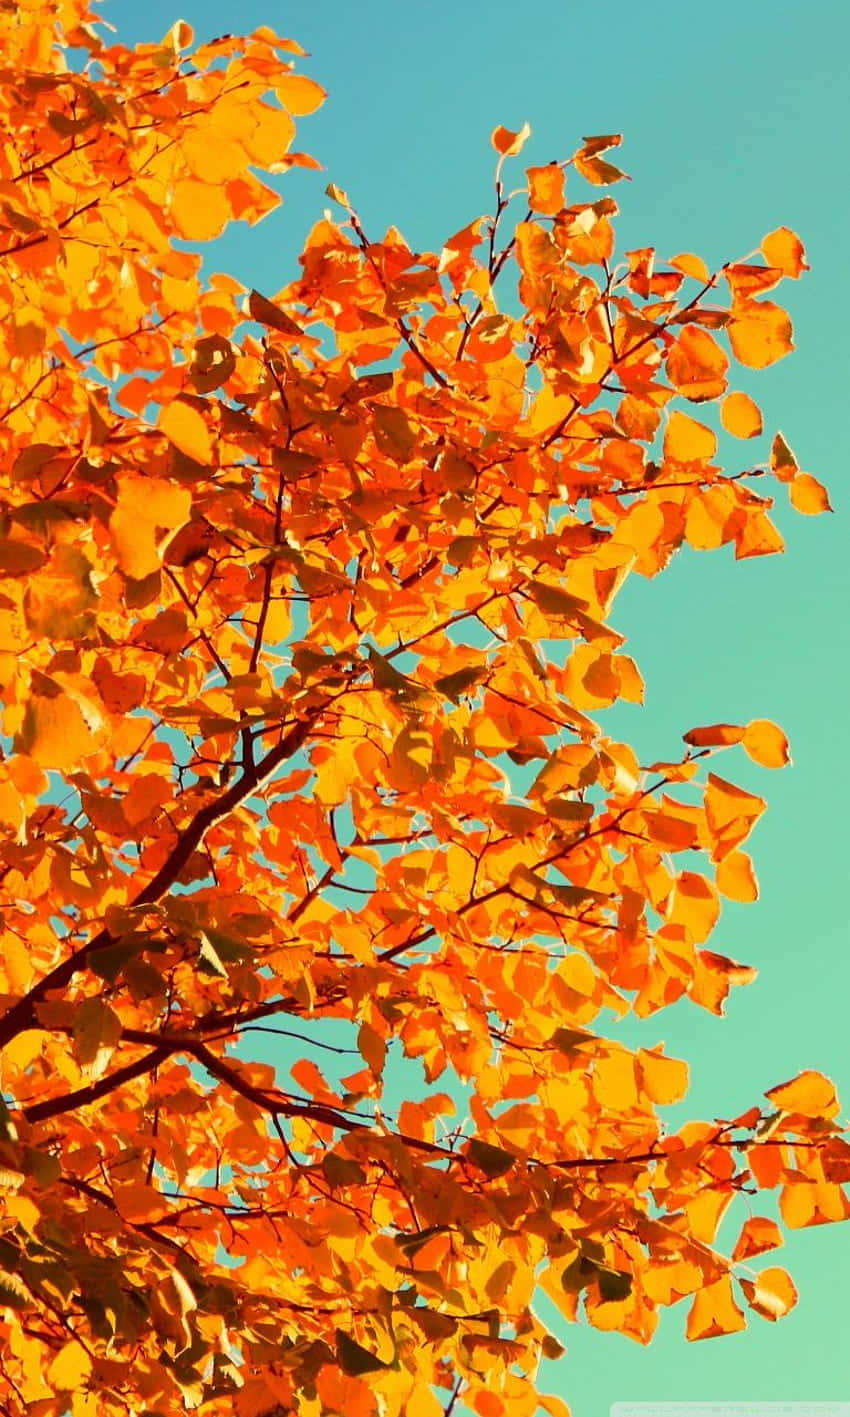 "Autumn Splendor" Wallpaper